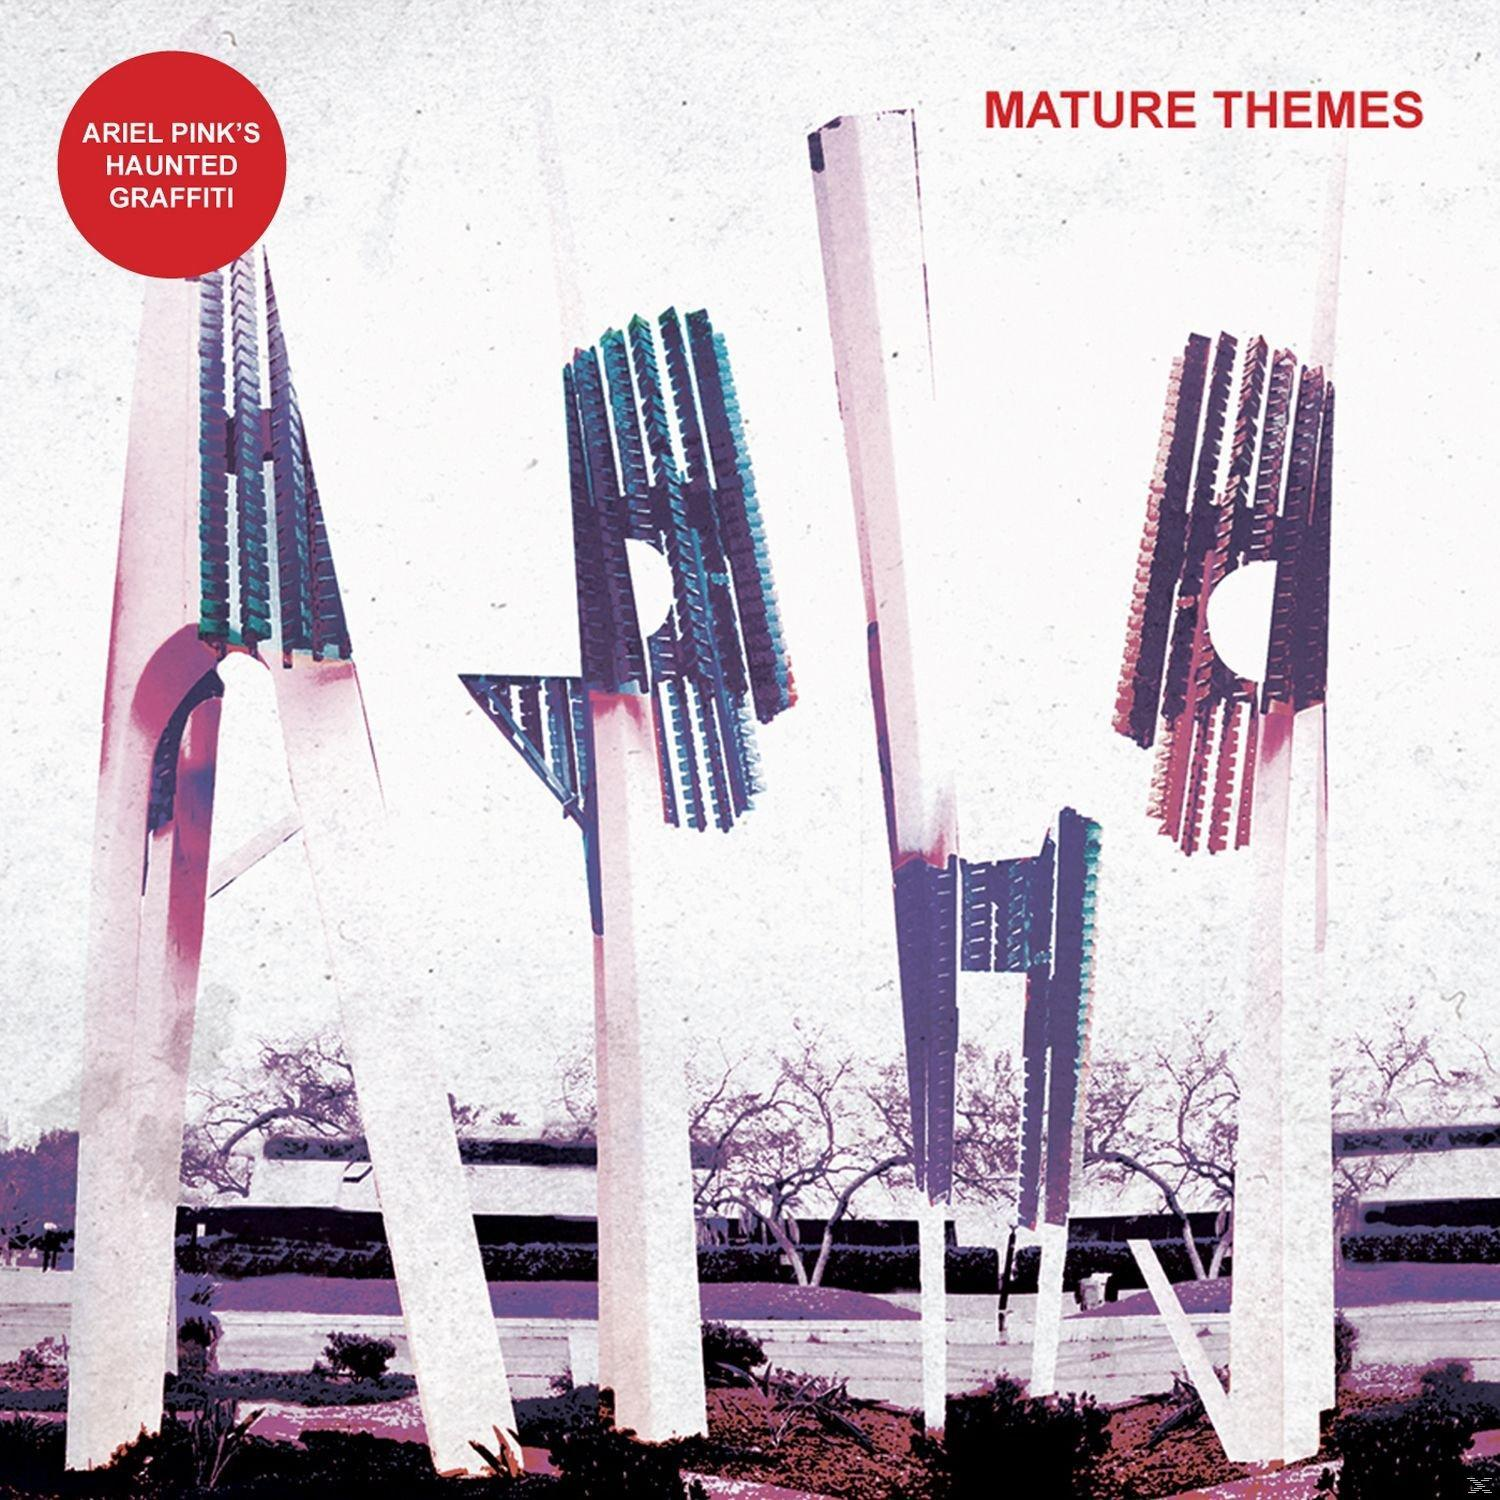 Ariel Pinks Haunted Graffiti Themes Mature Bonus-CD) - - (LP 